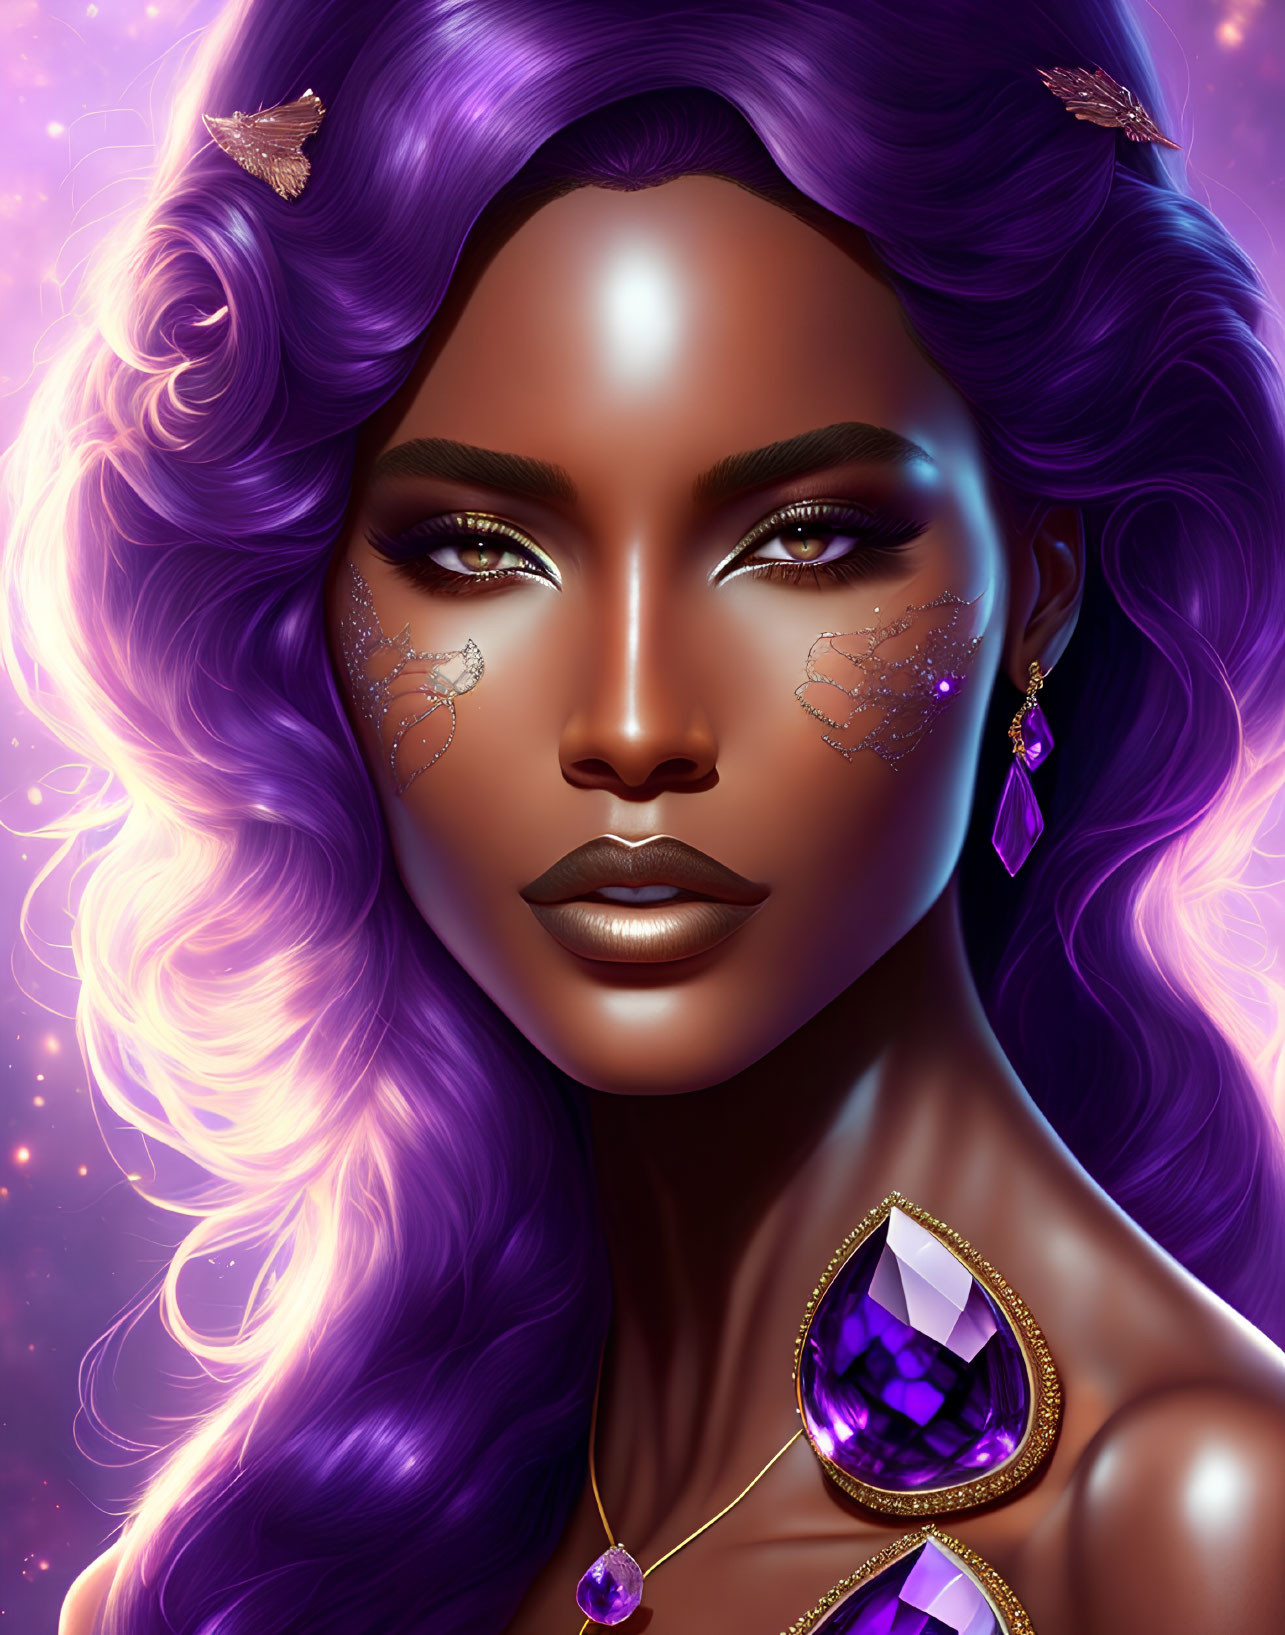 Vibrant Purple Hair Woman in Cosmic Fantasy Art